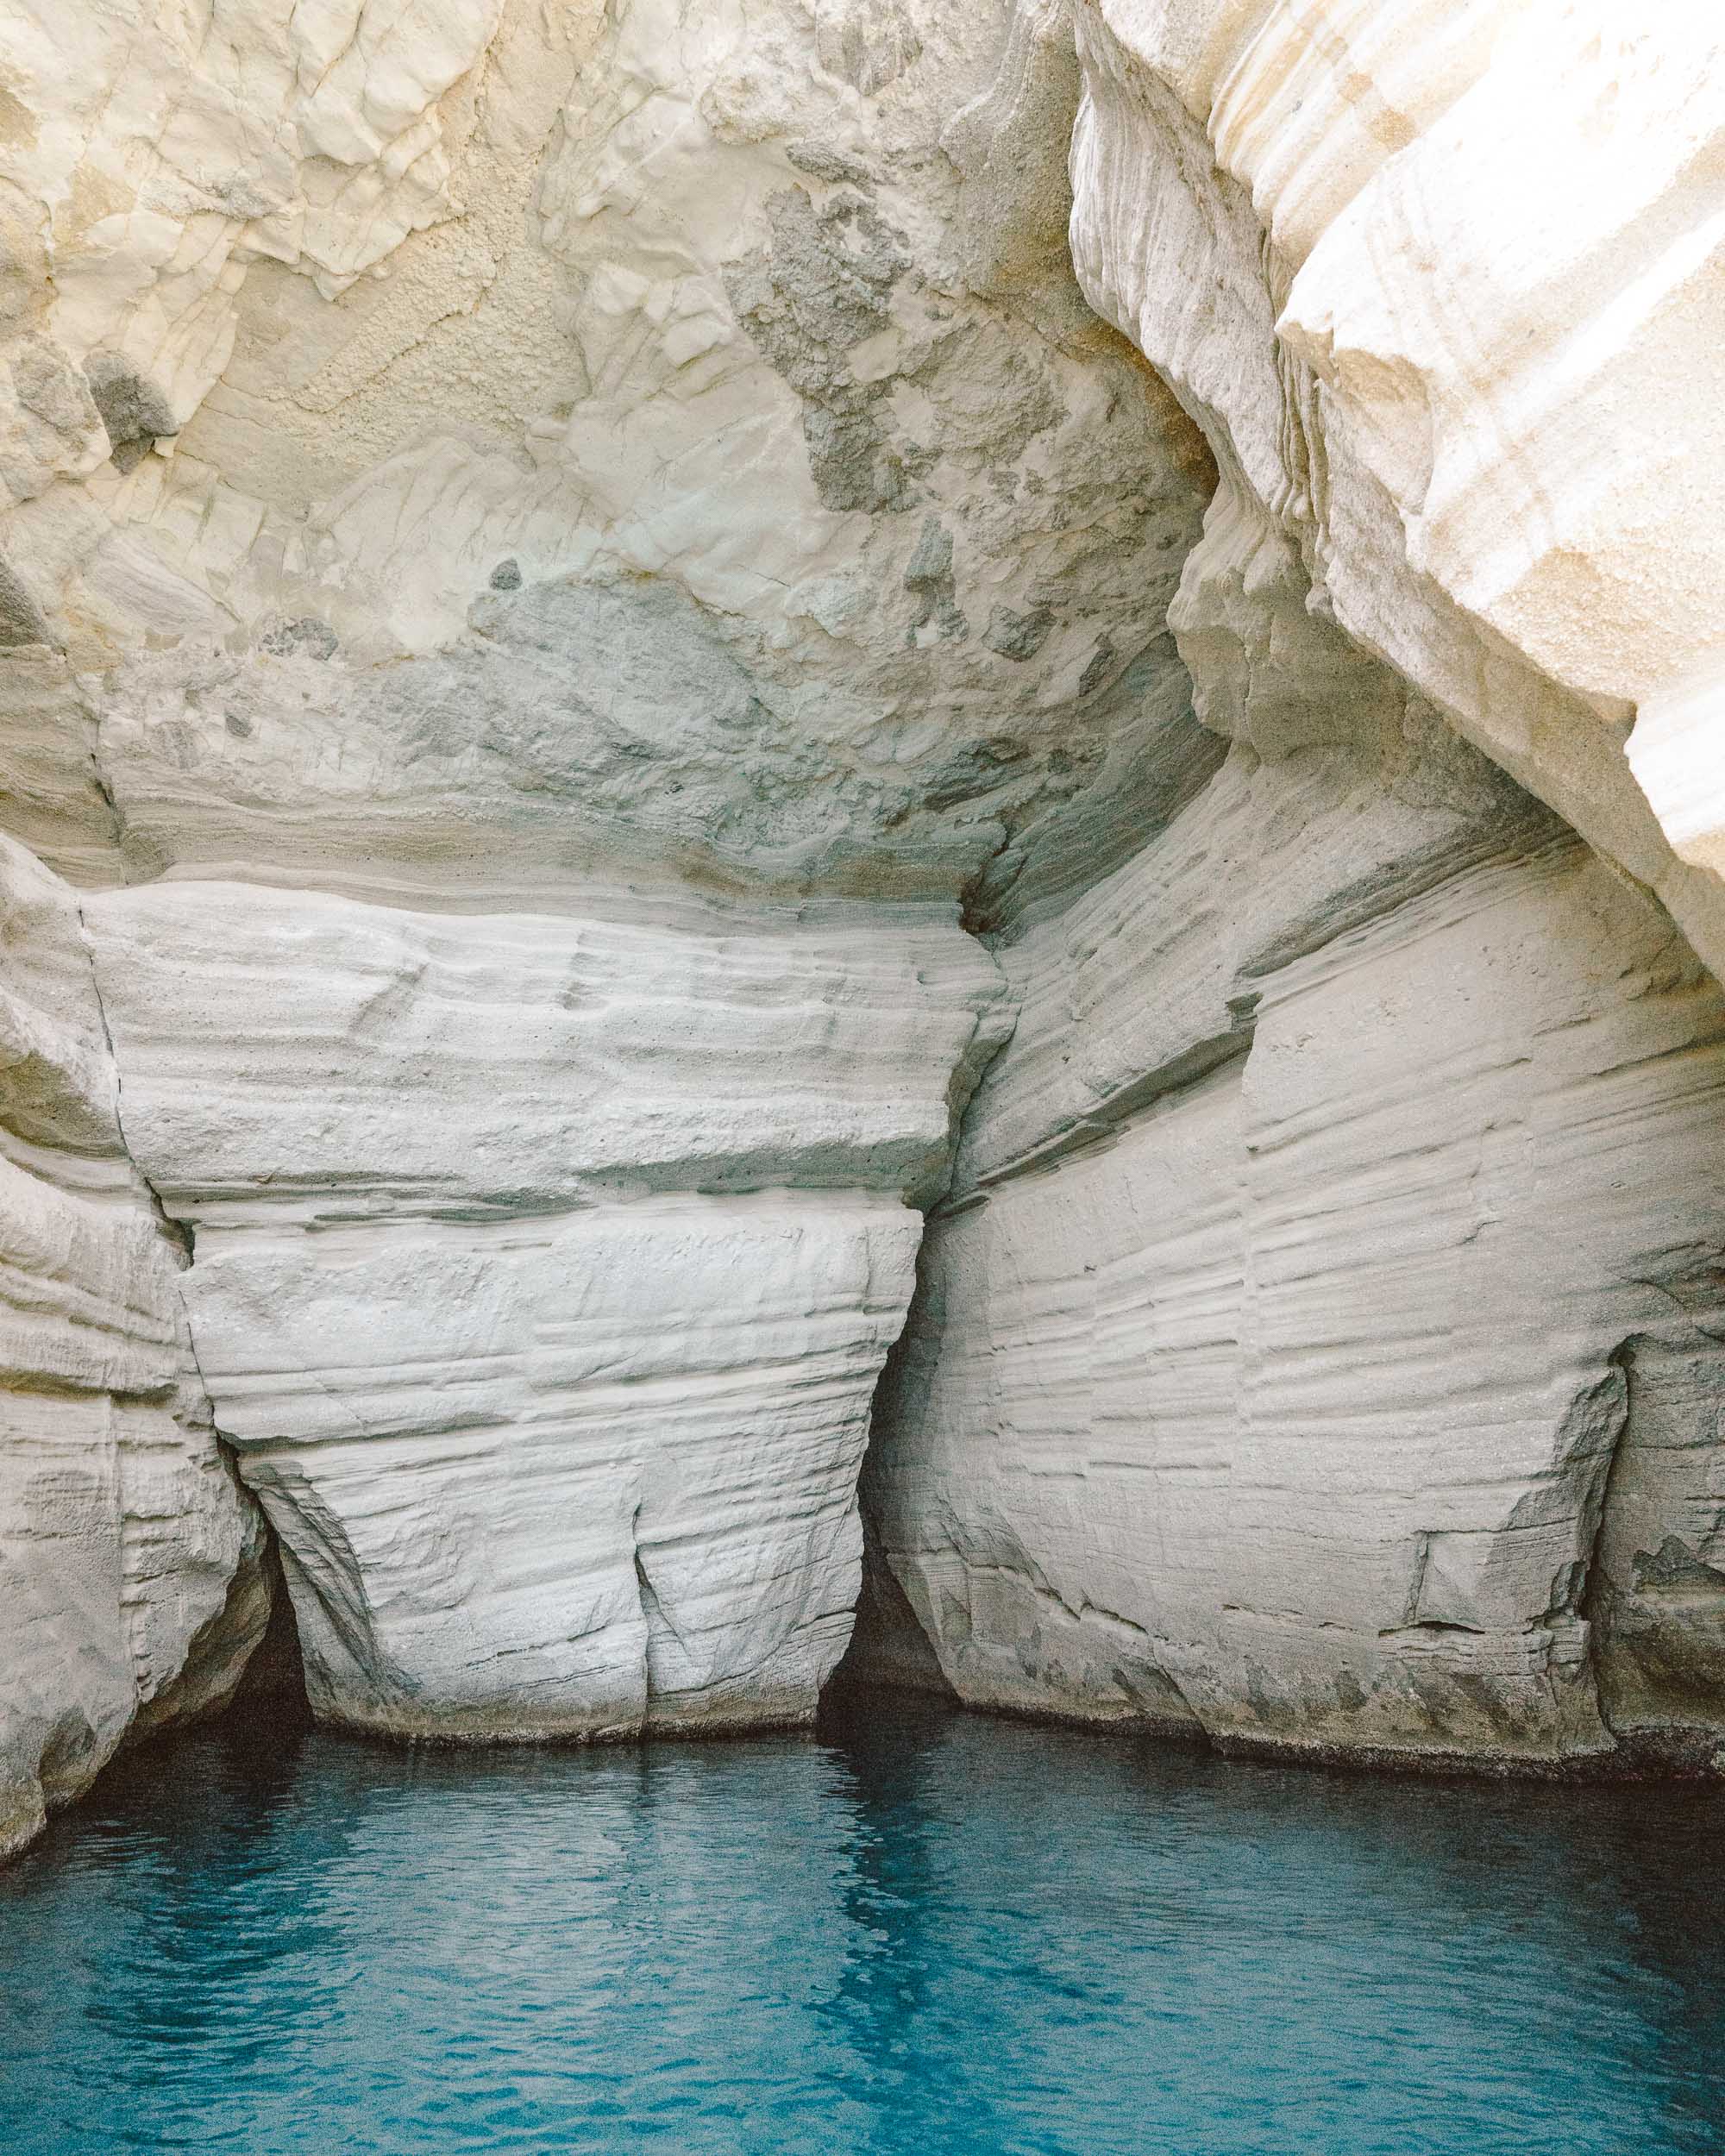 Kleftiko caves in Milos, Greece via @finduslost